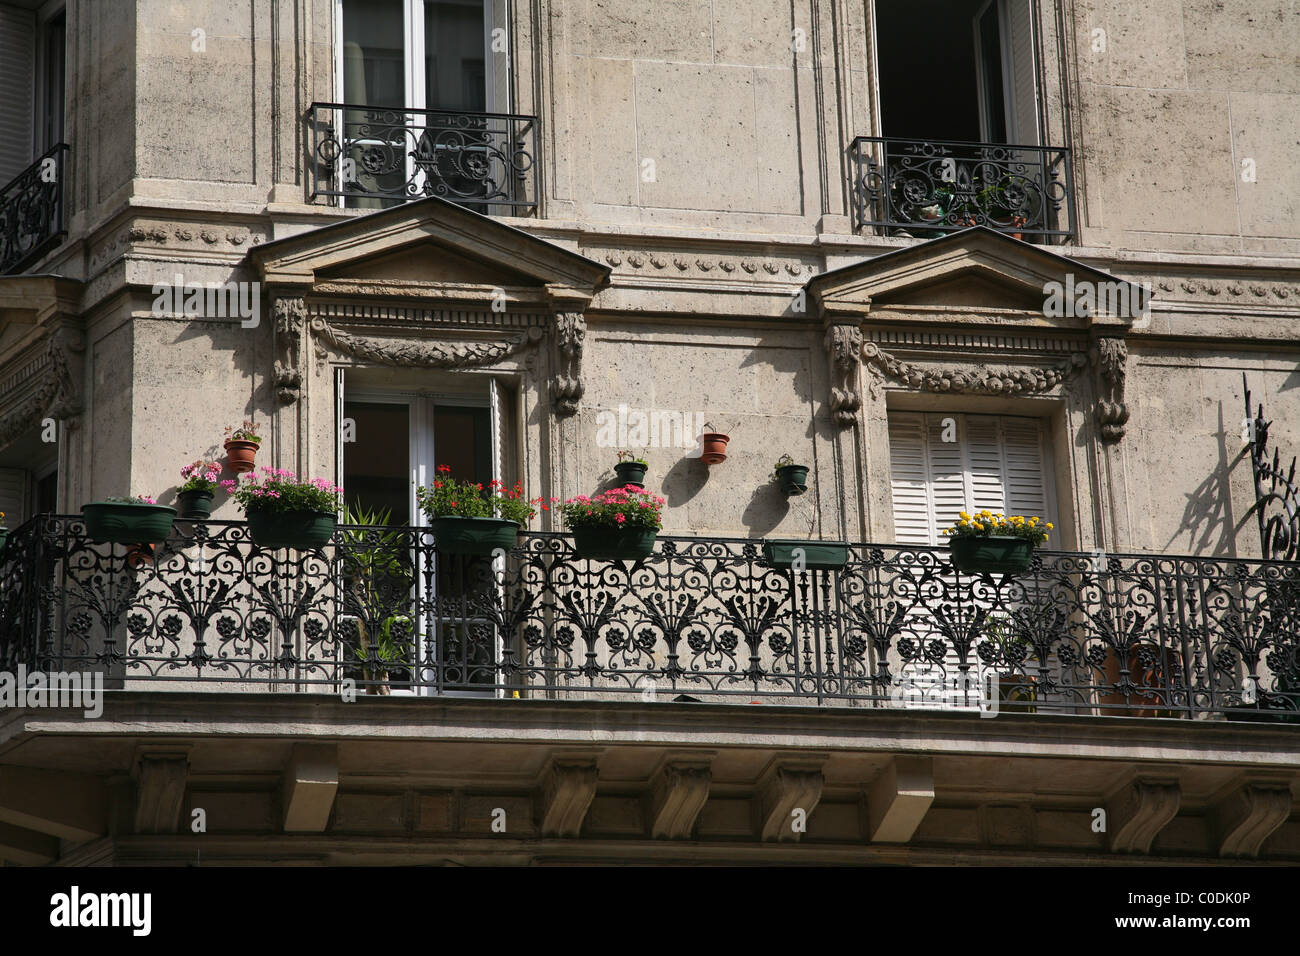 Ornate balcony of Parisian apartment building Stock Photo